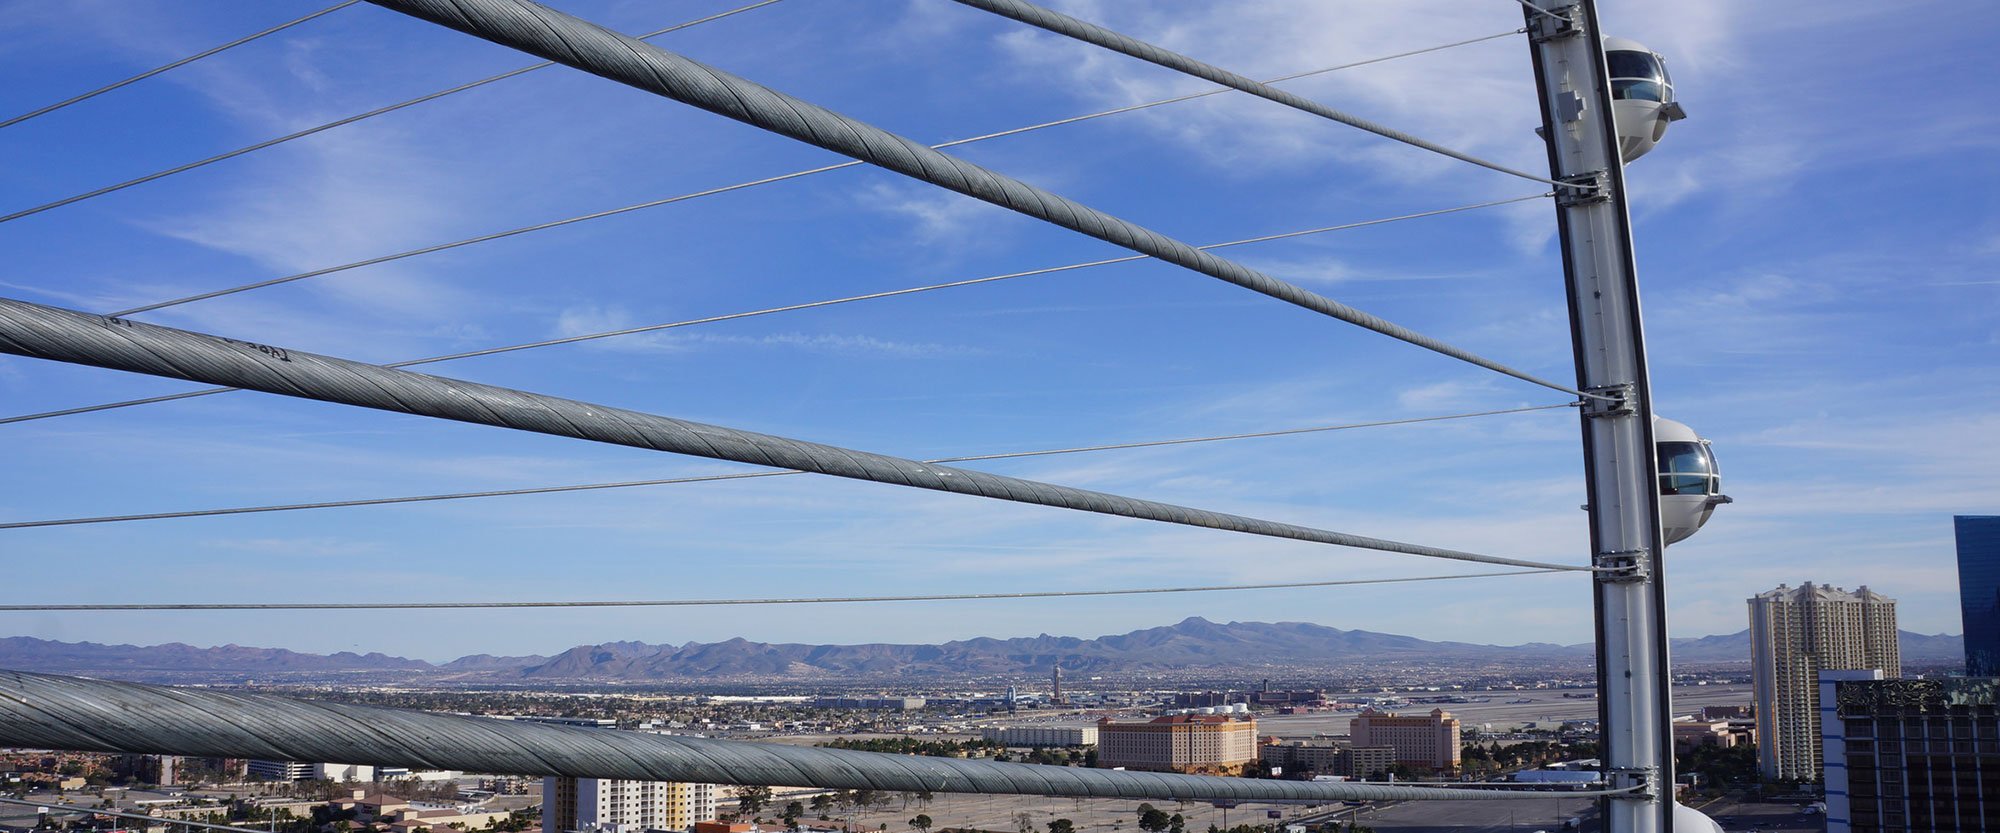 The Los Vegas High Roller Observation Wheel